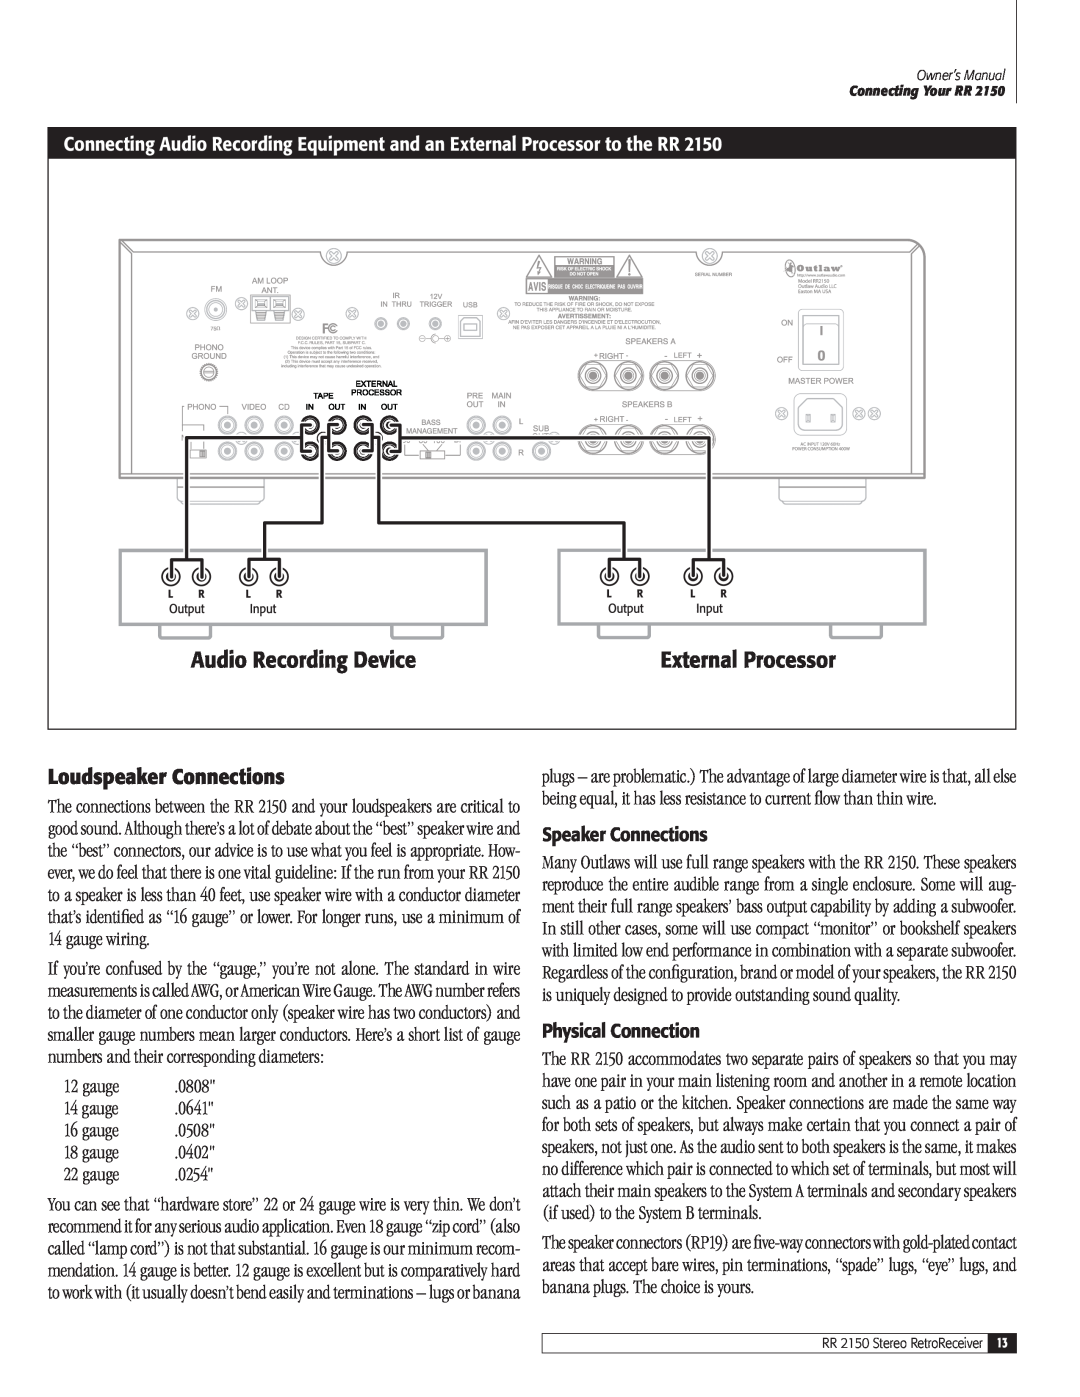 Outlaw Audio RR 2150 owner manual Loudspeaker Connections, Speaker Connections, Physical Connection, gauge 